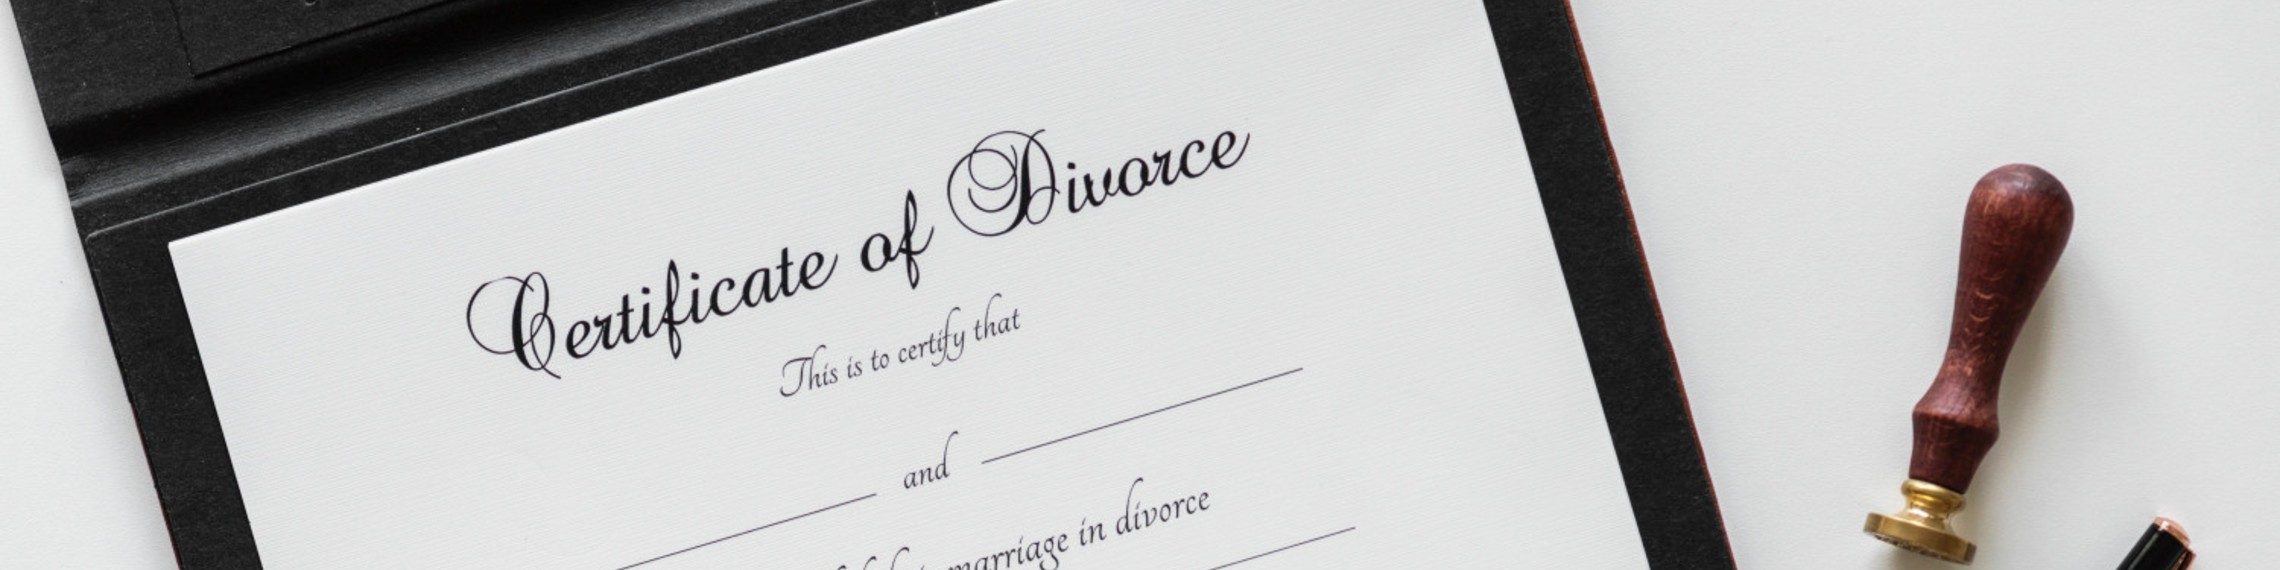 Certificate of Divorce image 